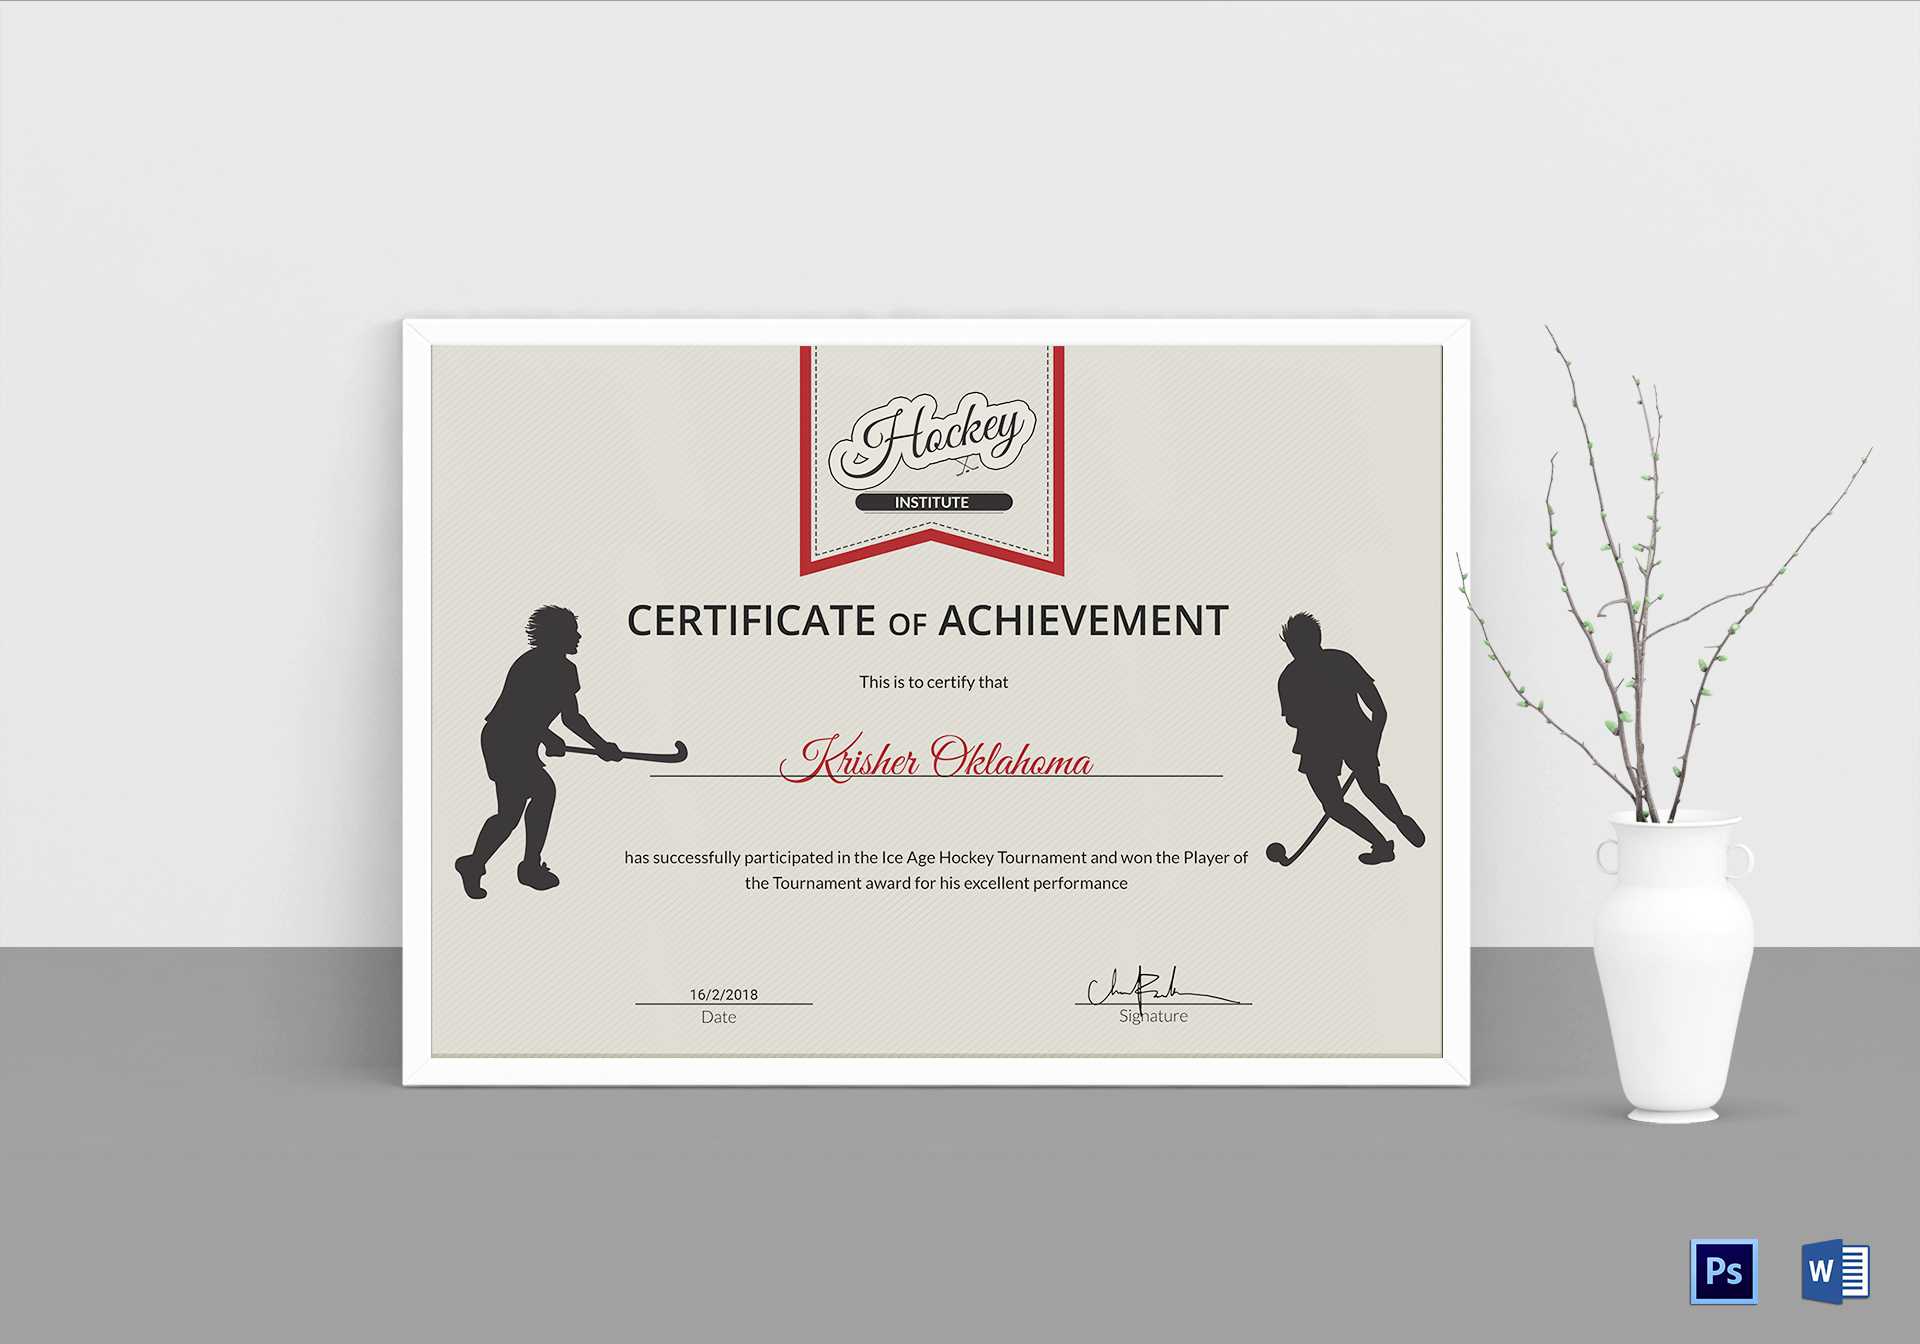 Ice Hockey Achievement Certificate Template With Hockey Certificate Templates